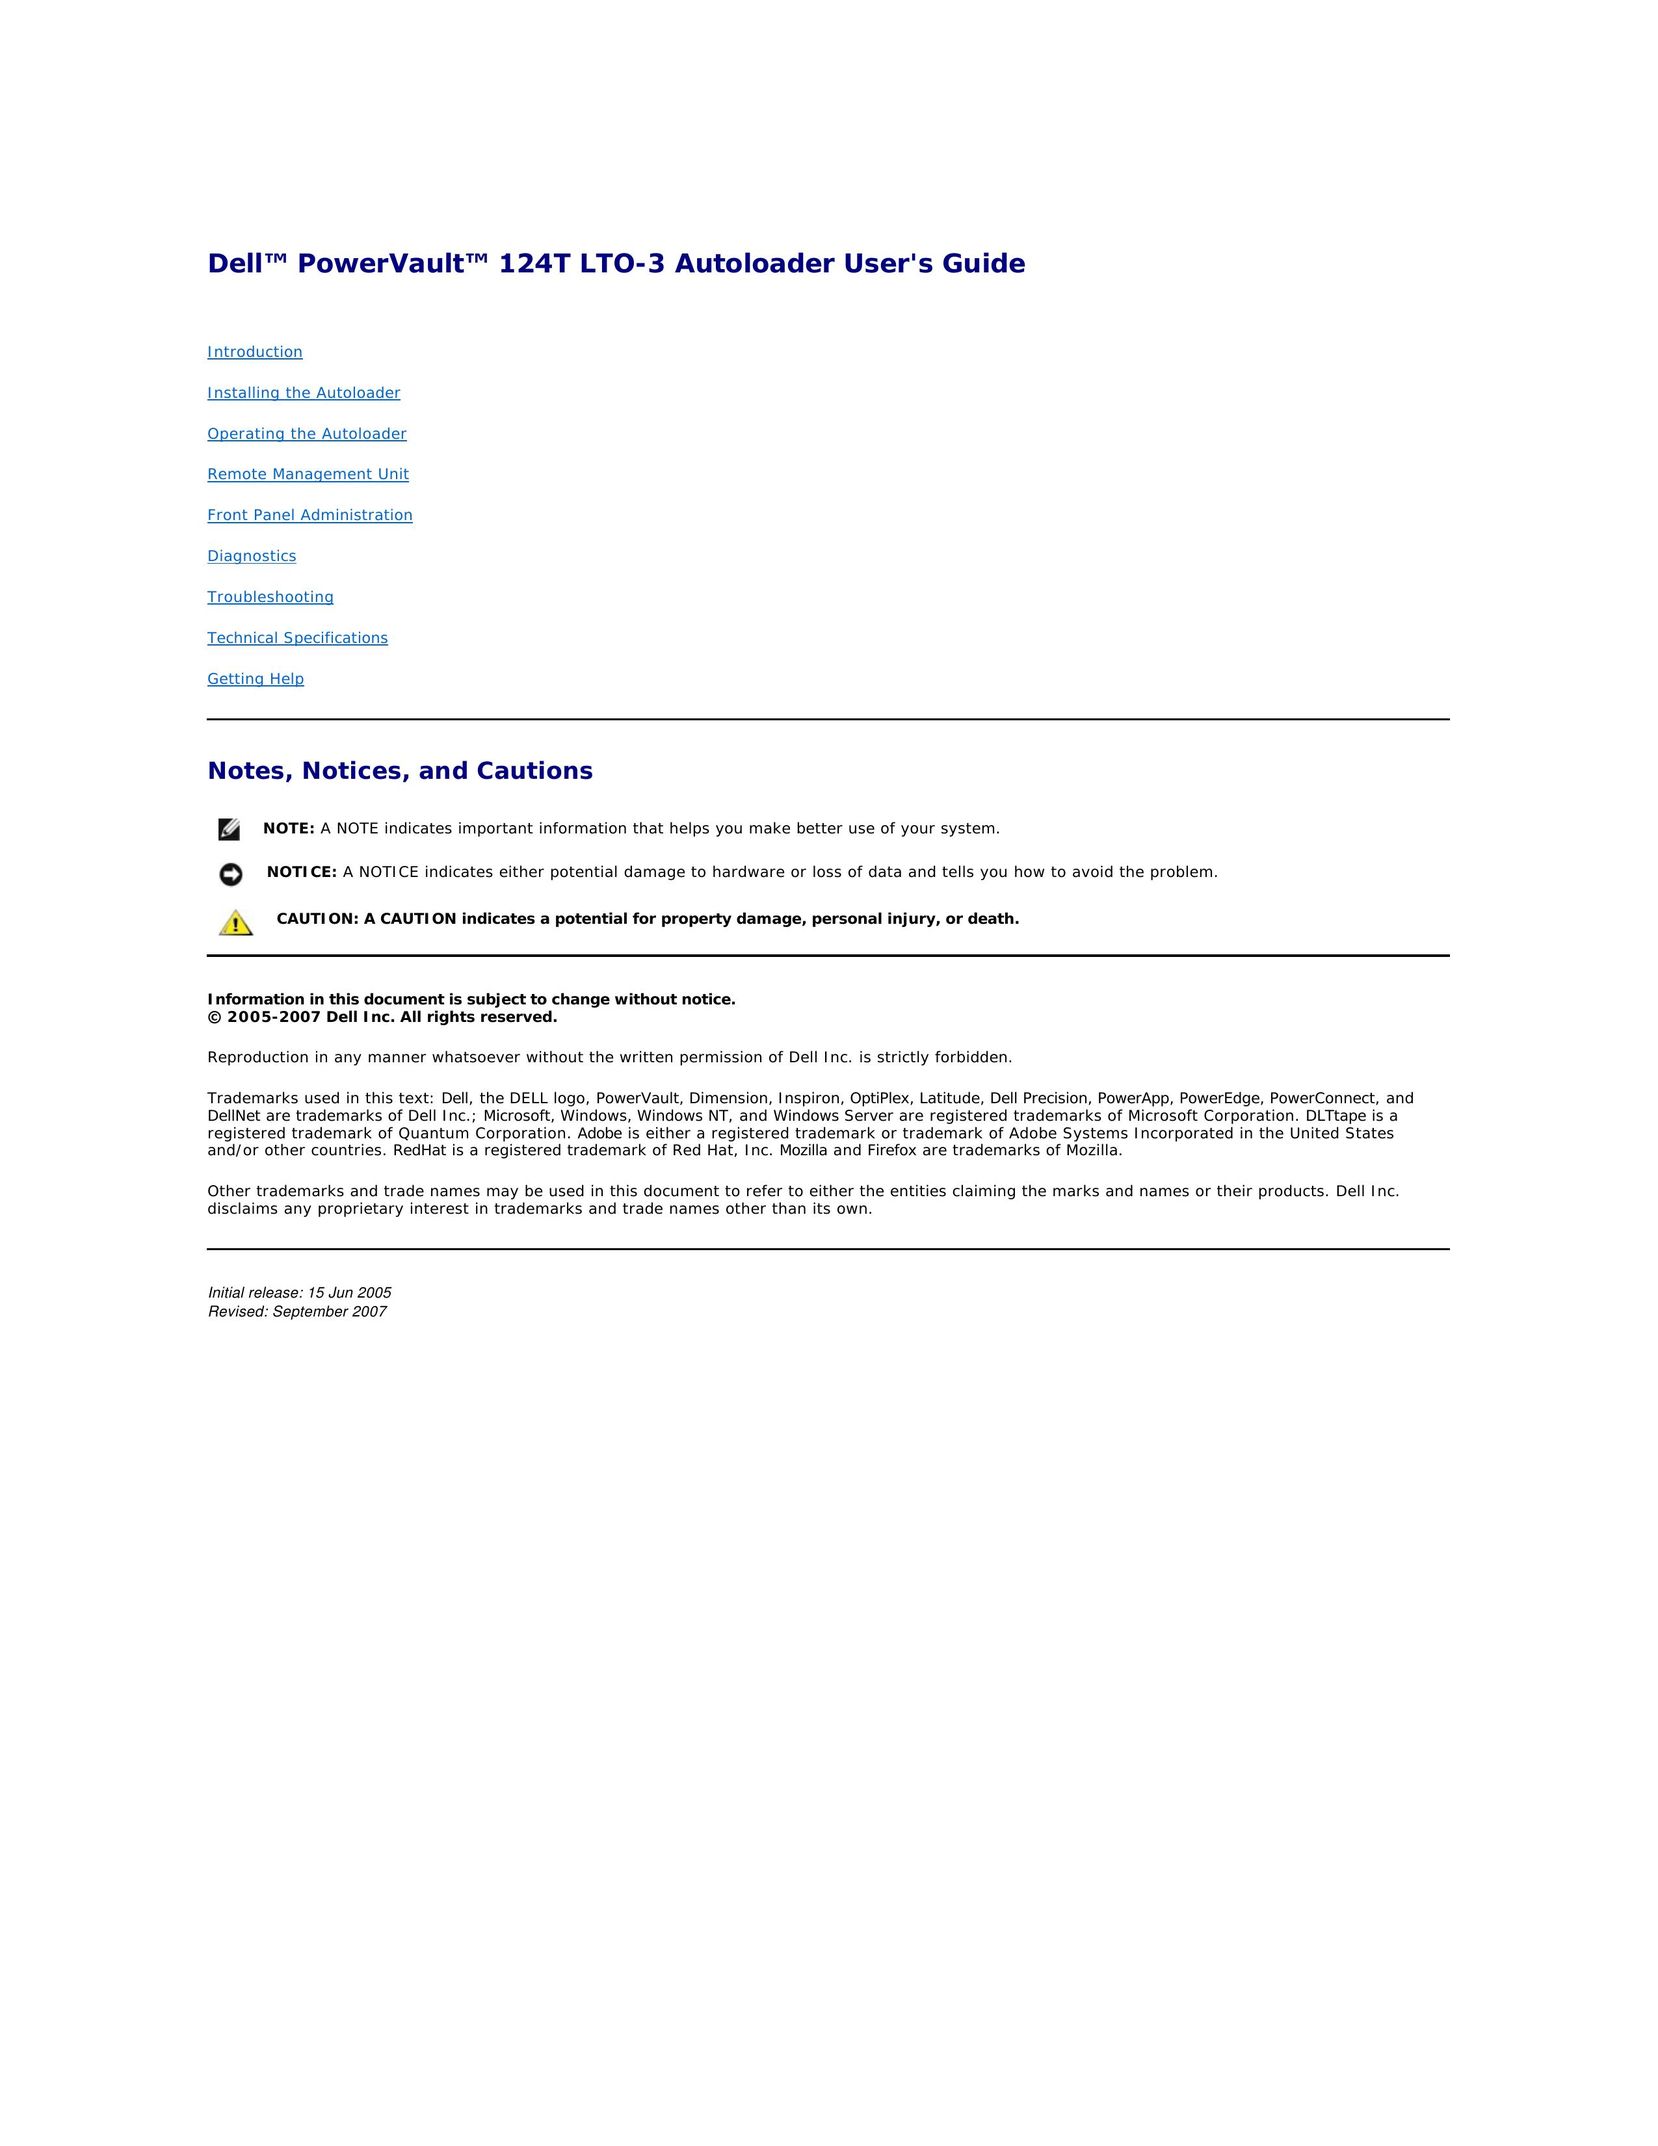 Dell 124T LTO-3 Network Hardware User Manual